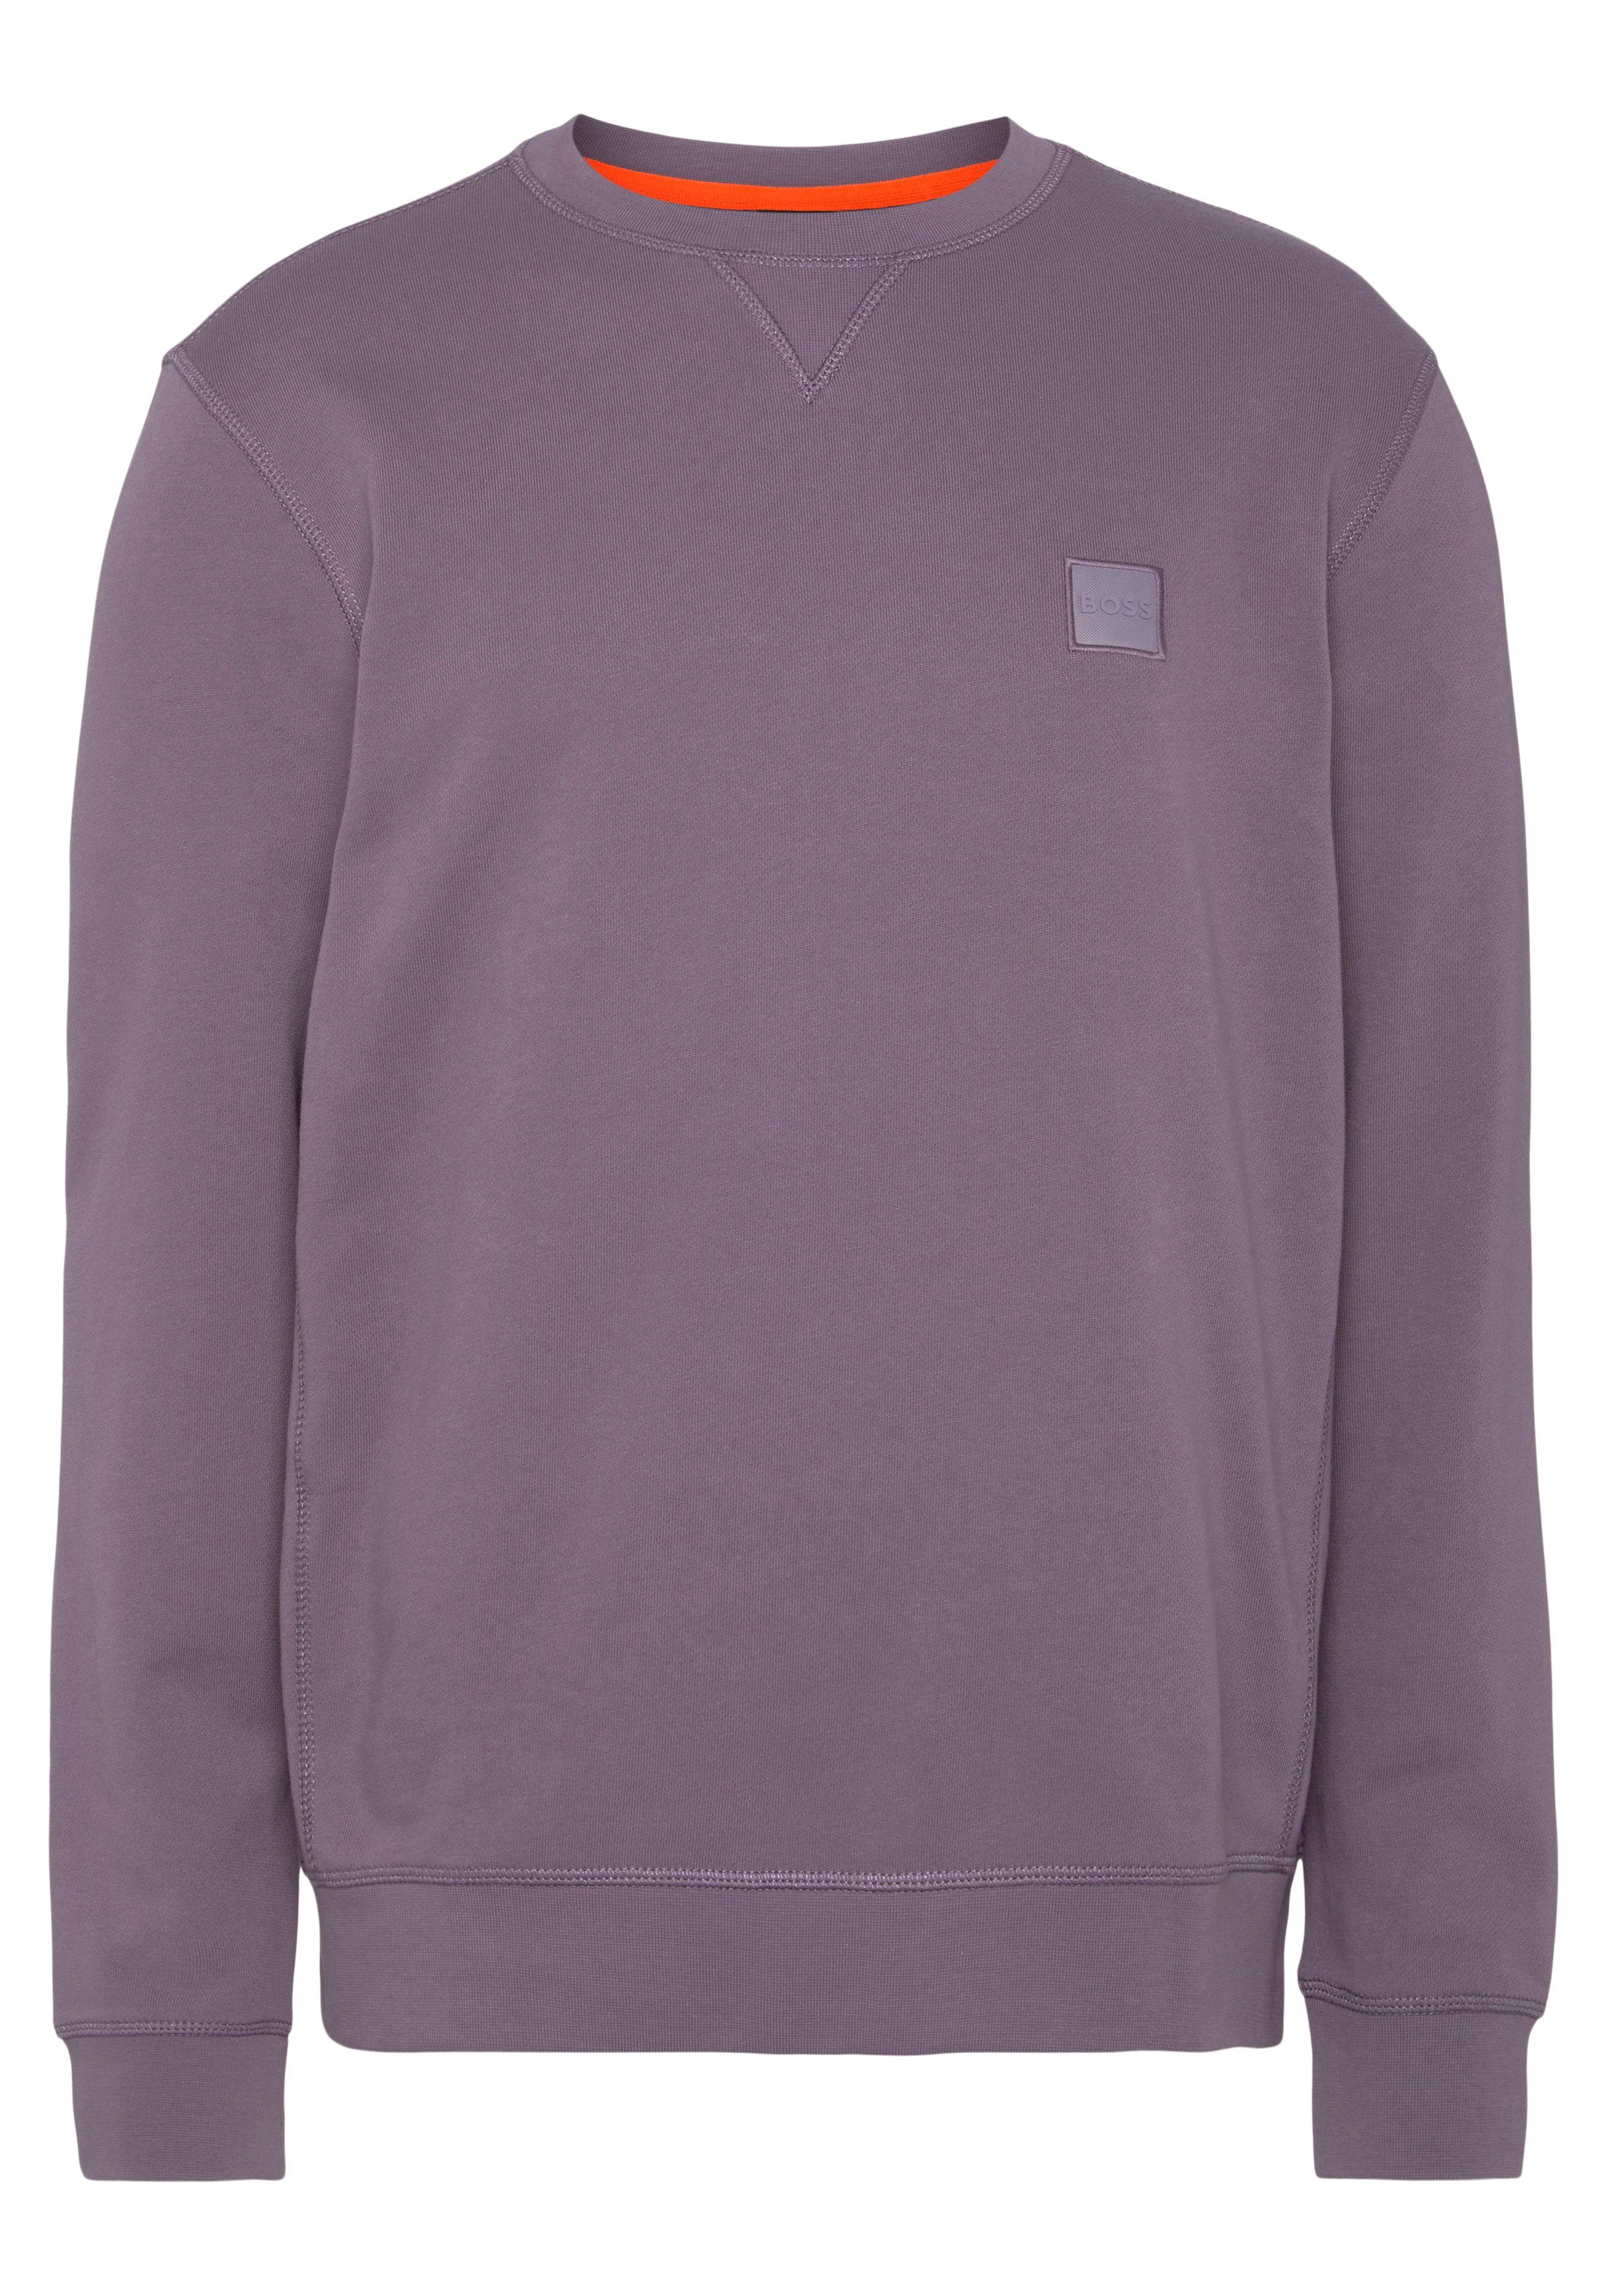 BOSS ORANGE Sweatshirt Westart mit aufgesticktem Medium Purple511 Logo BOSS